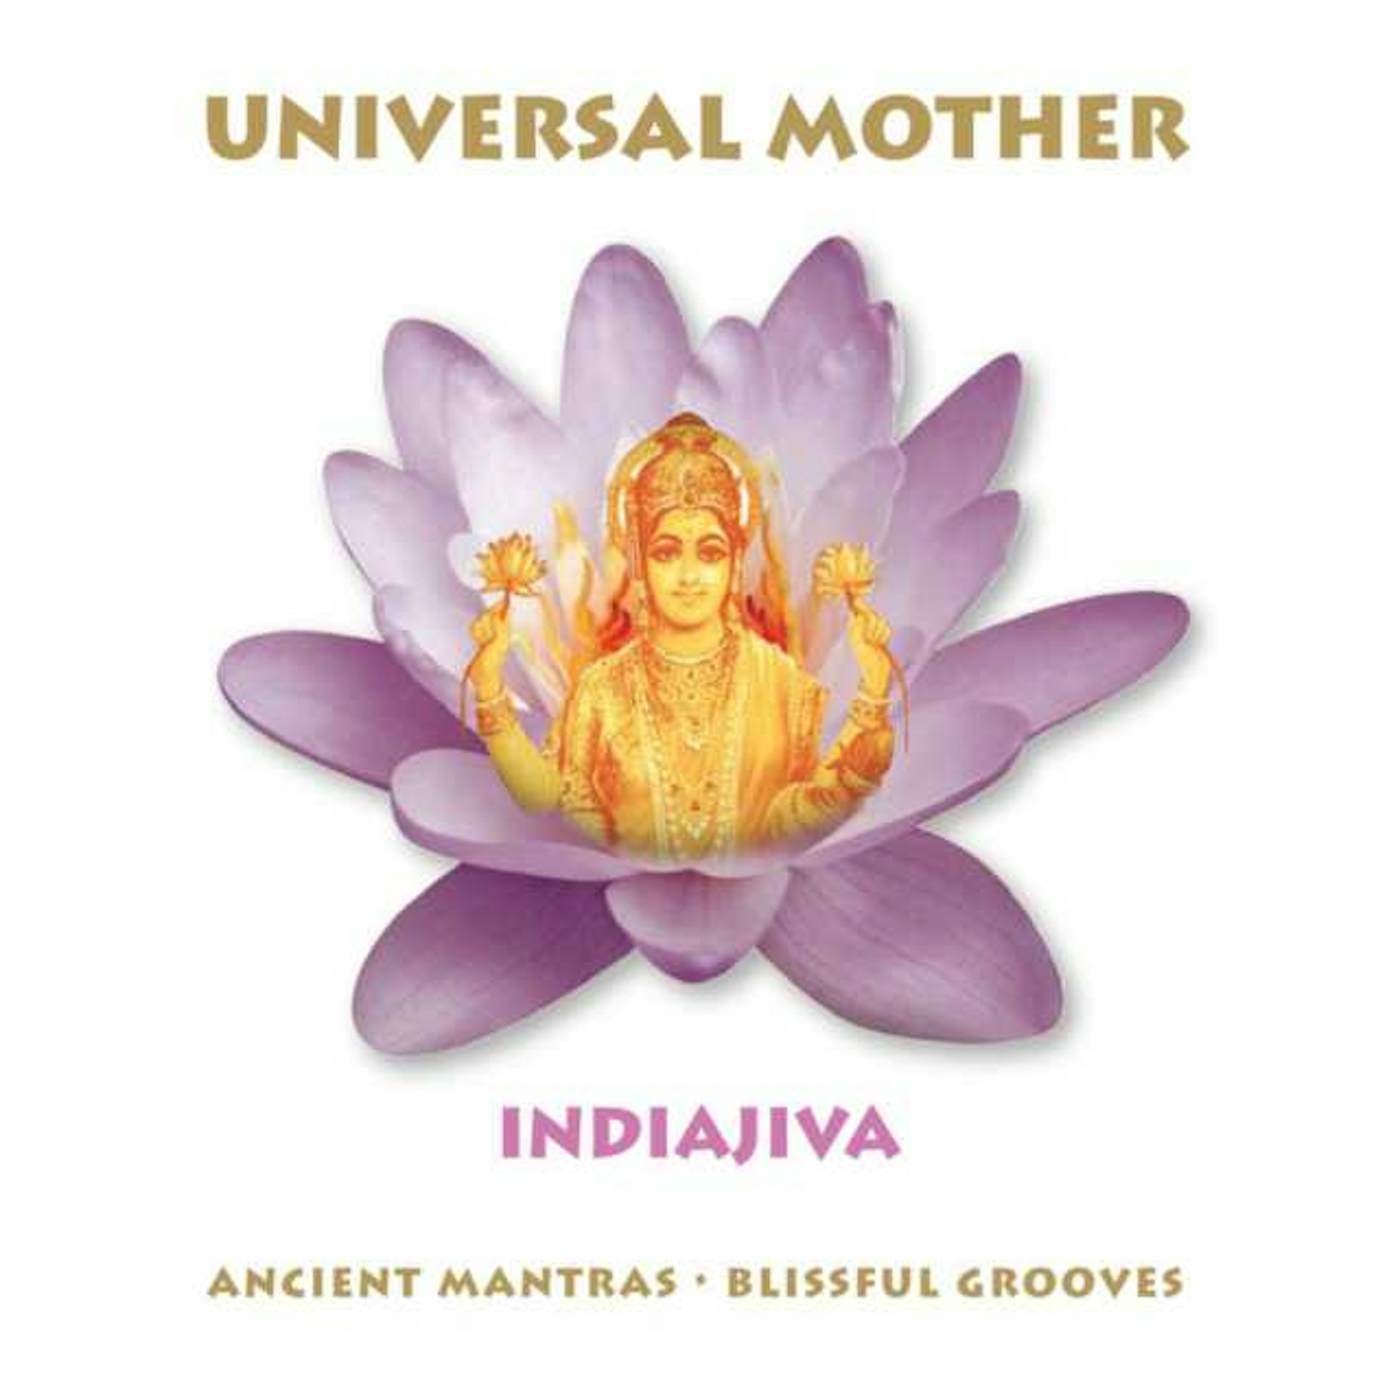 Indiajiva UNIVERSAL MOTHER CD